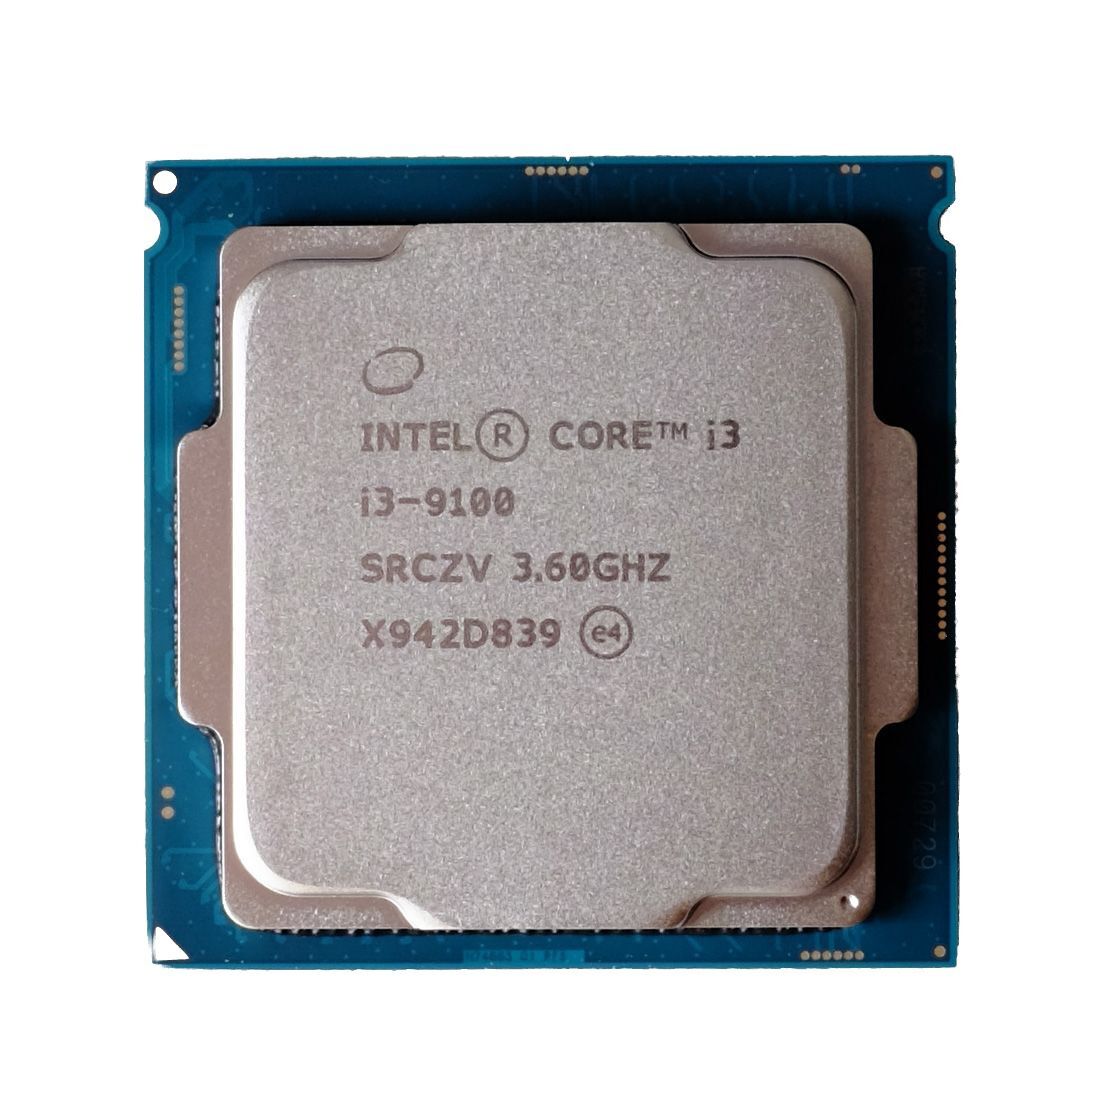 Интел коре ай3. Процессор Intel Core i3-9100f OEM. Intel Core i3-9100f lga1151 v2, 4 x 3600 МГЦ. Intel Core i3-9100t lga1151 v2, 4 x 3100 МГЦ. Intel Core i7 13700k.